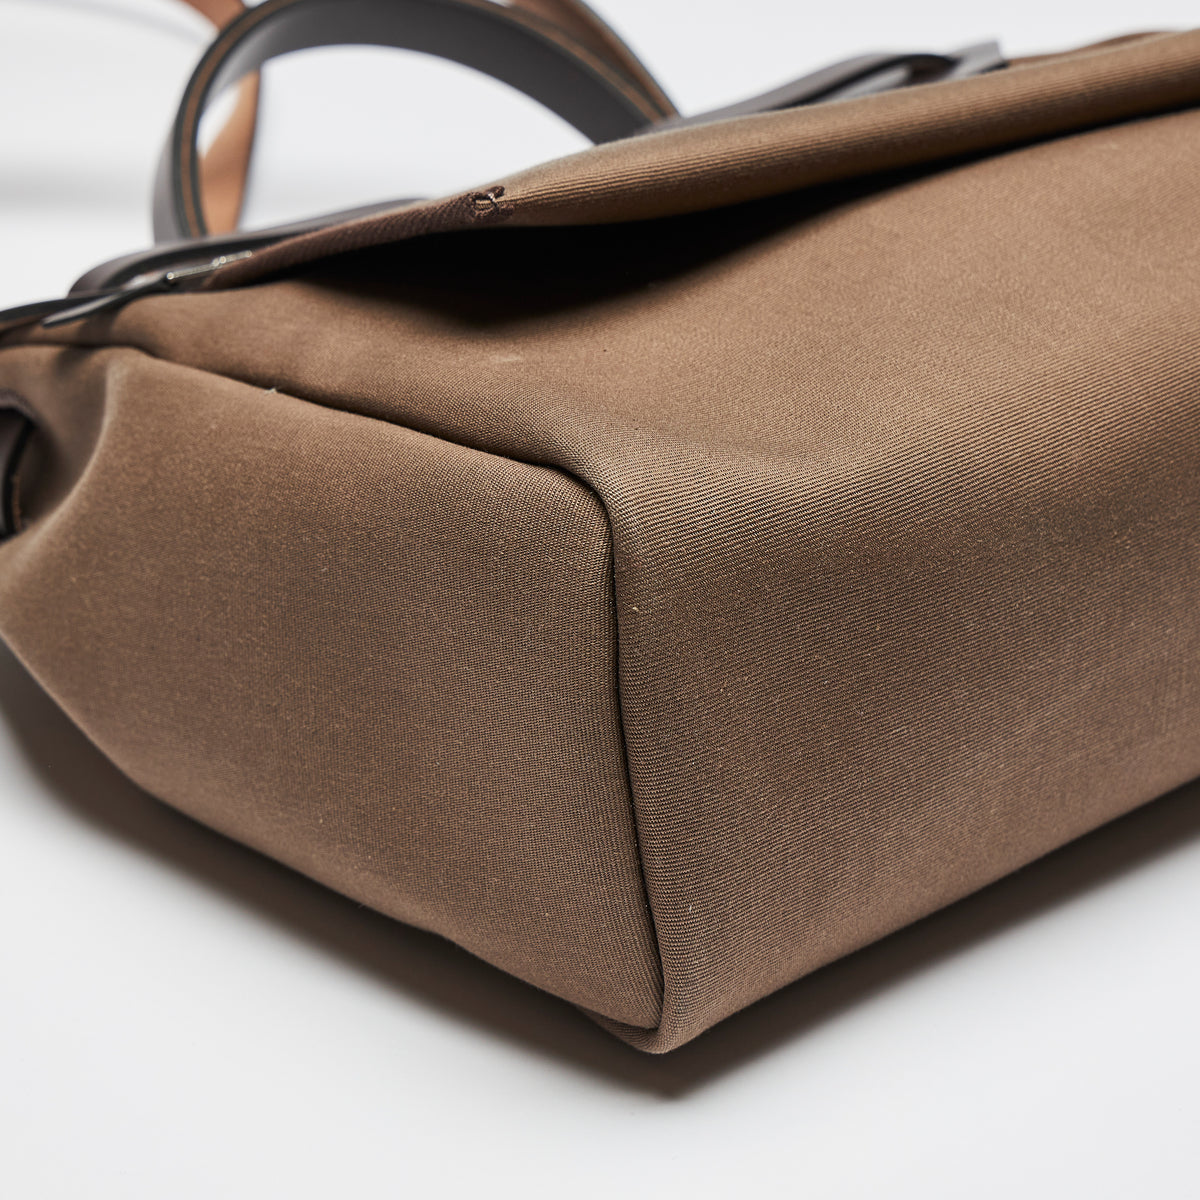 Excellent Pre-Loved Brown Canvas Top Handle Flap Bag with Shoulder Strap. (corner)